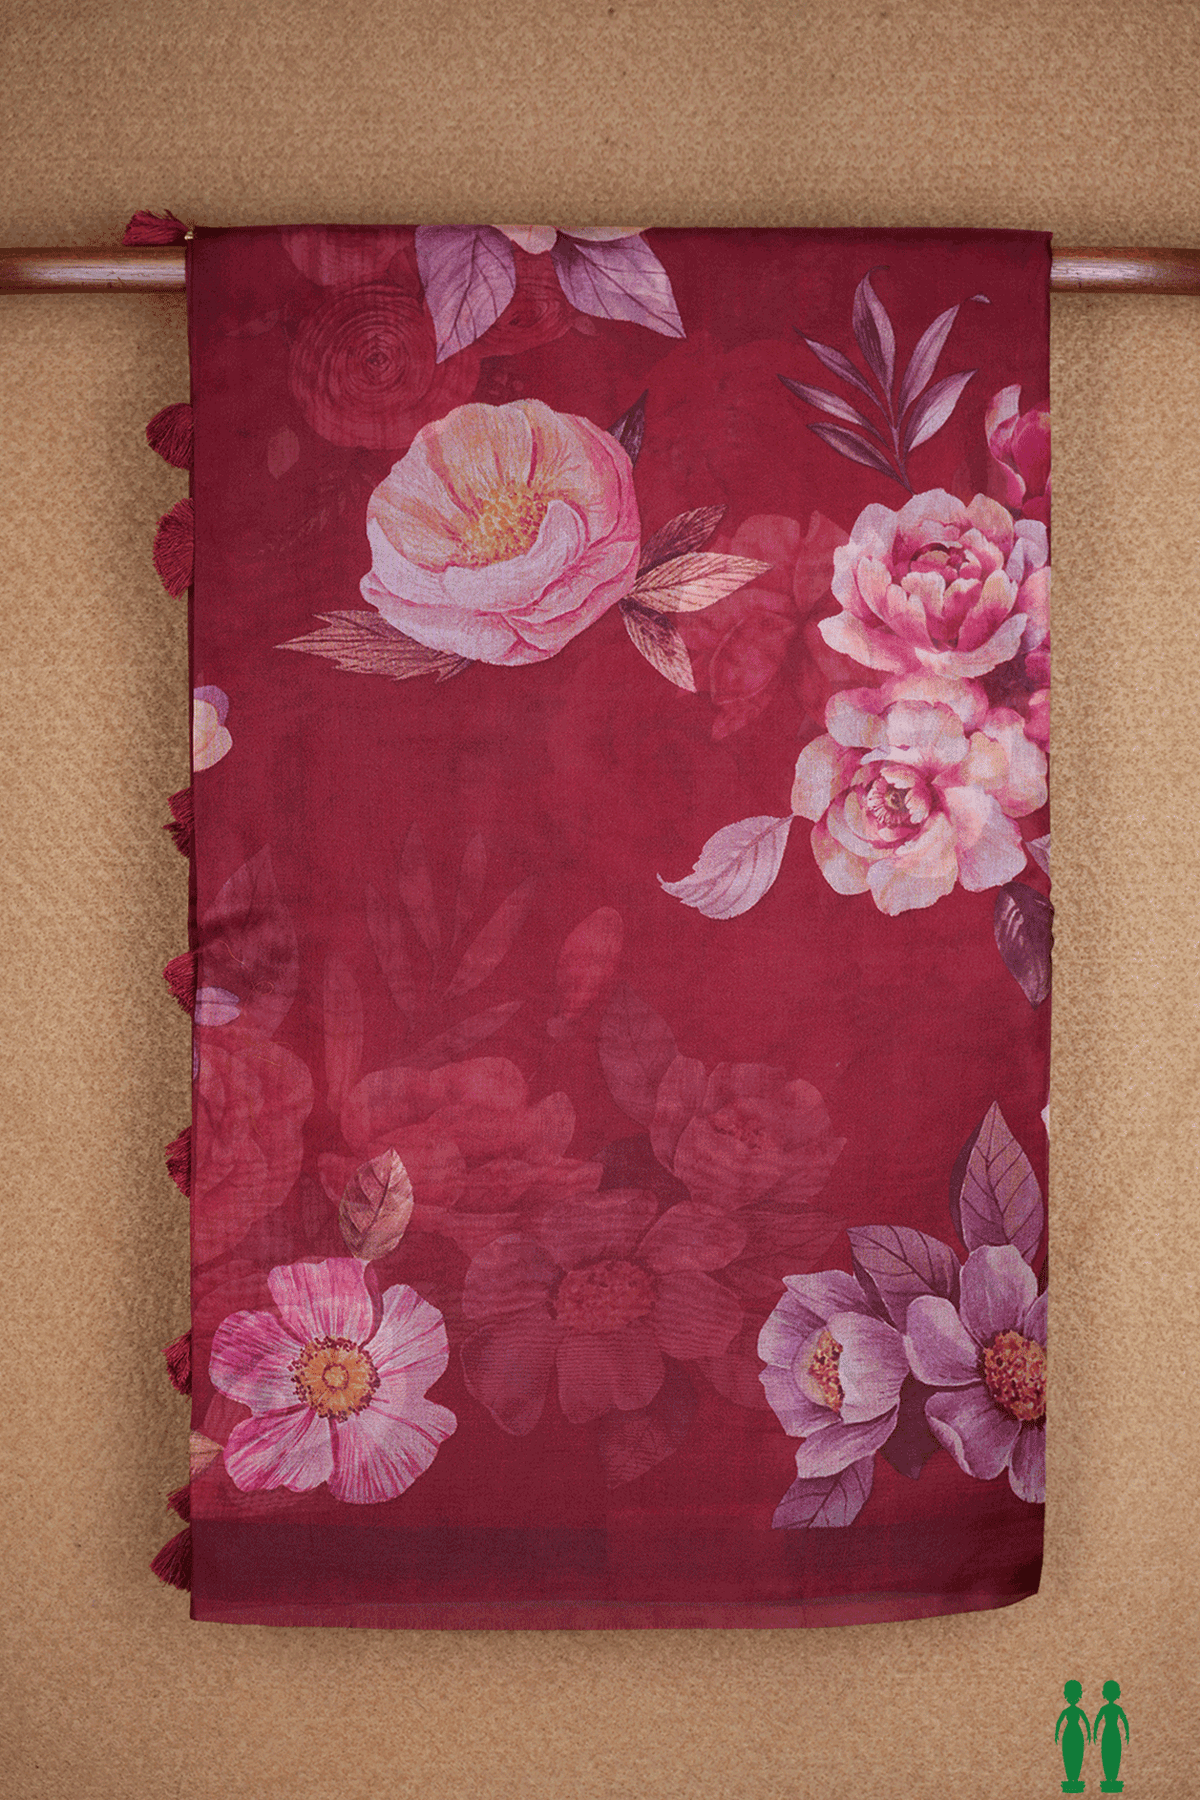 Floral Digital Printed Cherry Red Organza Silk Saree